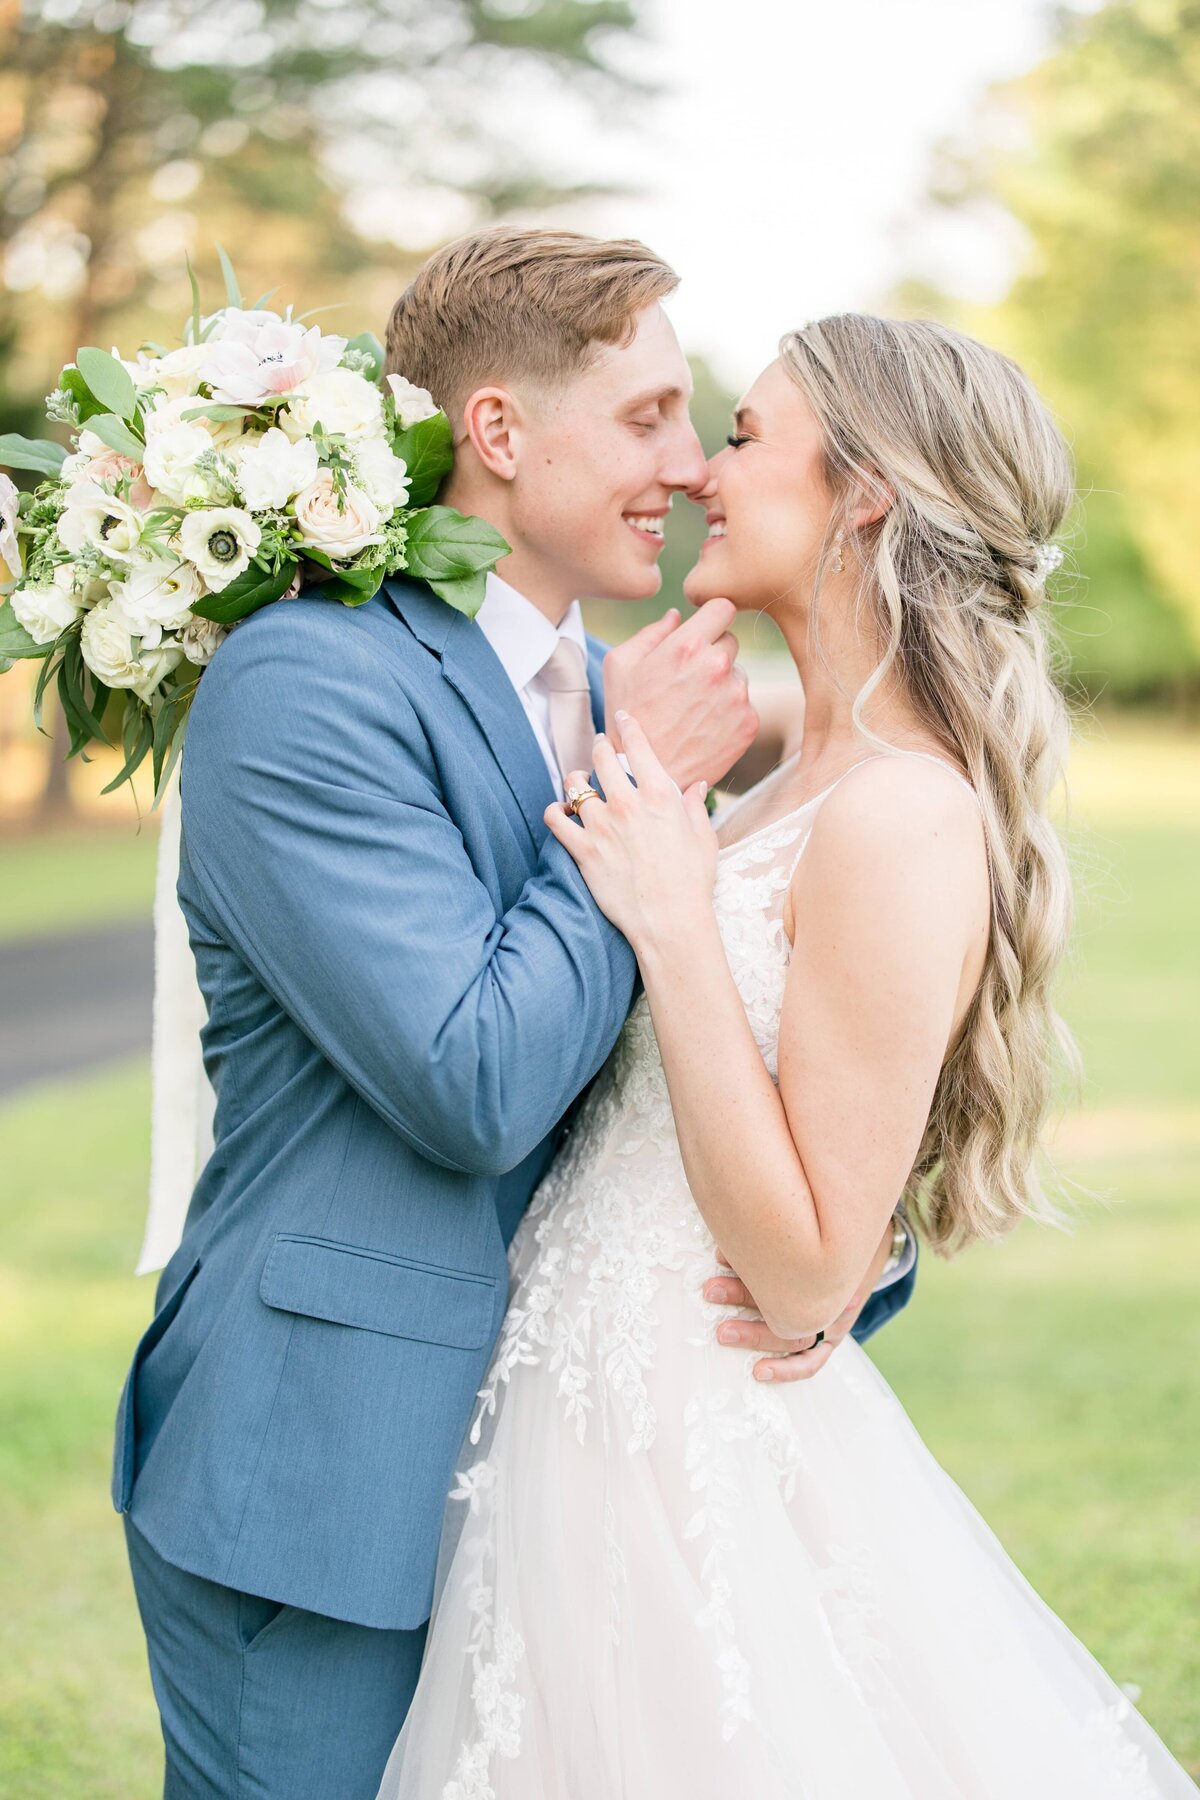 Samantha & Connor's Spring Wedding at the Sonnet House - Katie & Alec Photography Birmingham, Alabama Wedding Photographers 21